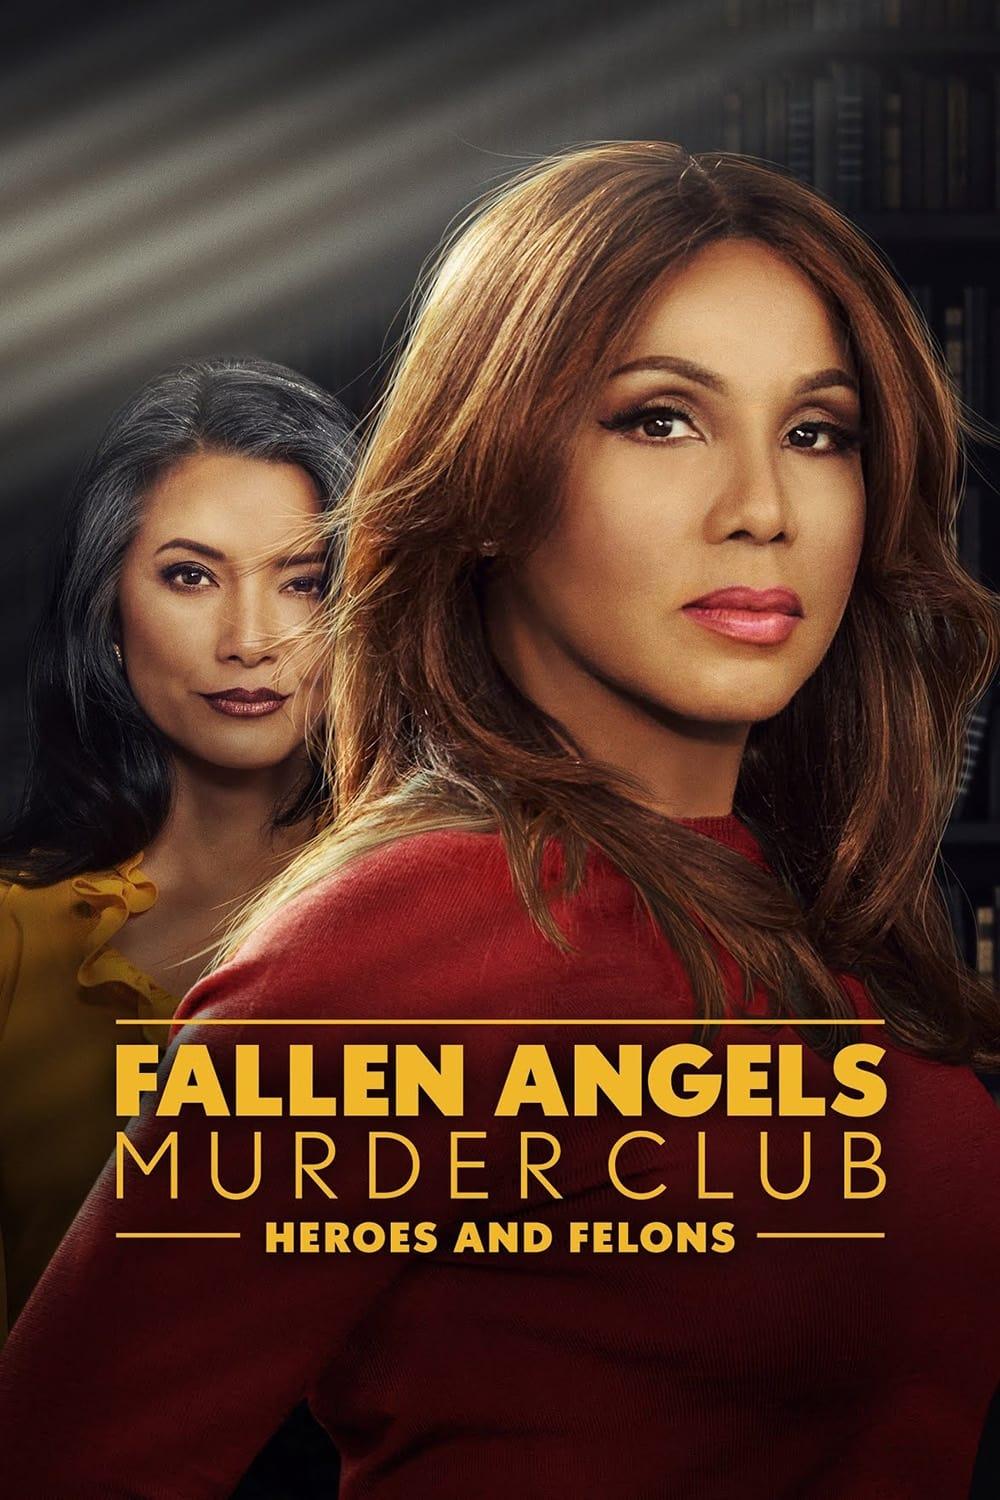 Fallen Angels Murder Club: Heroes and Felons poster